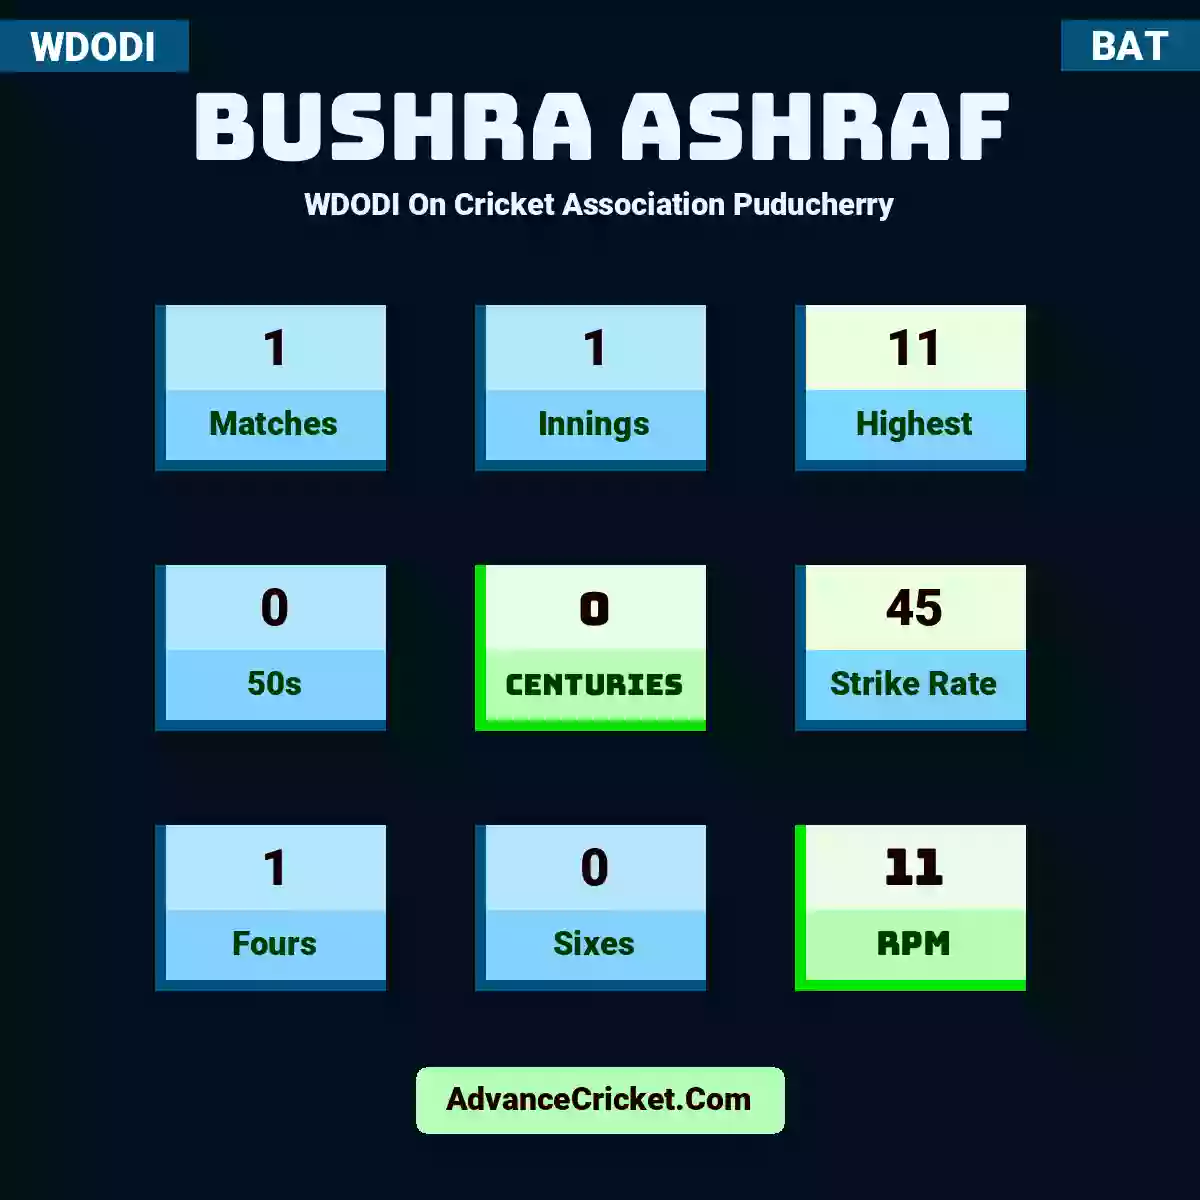 Bushra Ashraf WDODI  On Cricket Association Puducherry, Bushra Ashraf played 1 matches, scored 11 runs as highest, 0 half-centuries, and 0 centuries, with a strike rate of 45. B.Ashraf hit 1 fours and 0 sixes, with an RPM of 11.